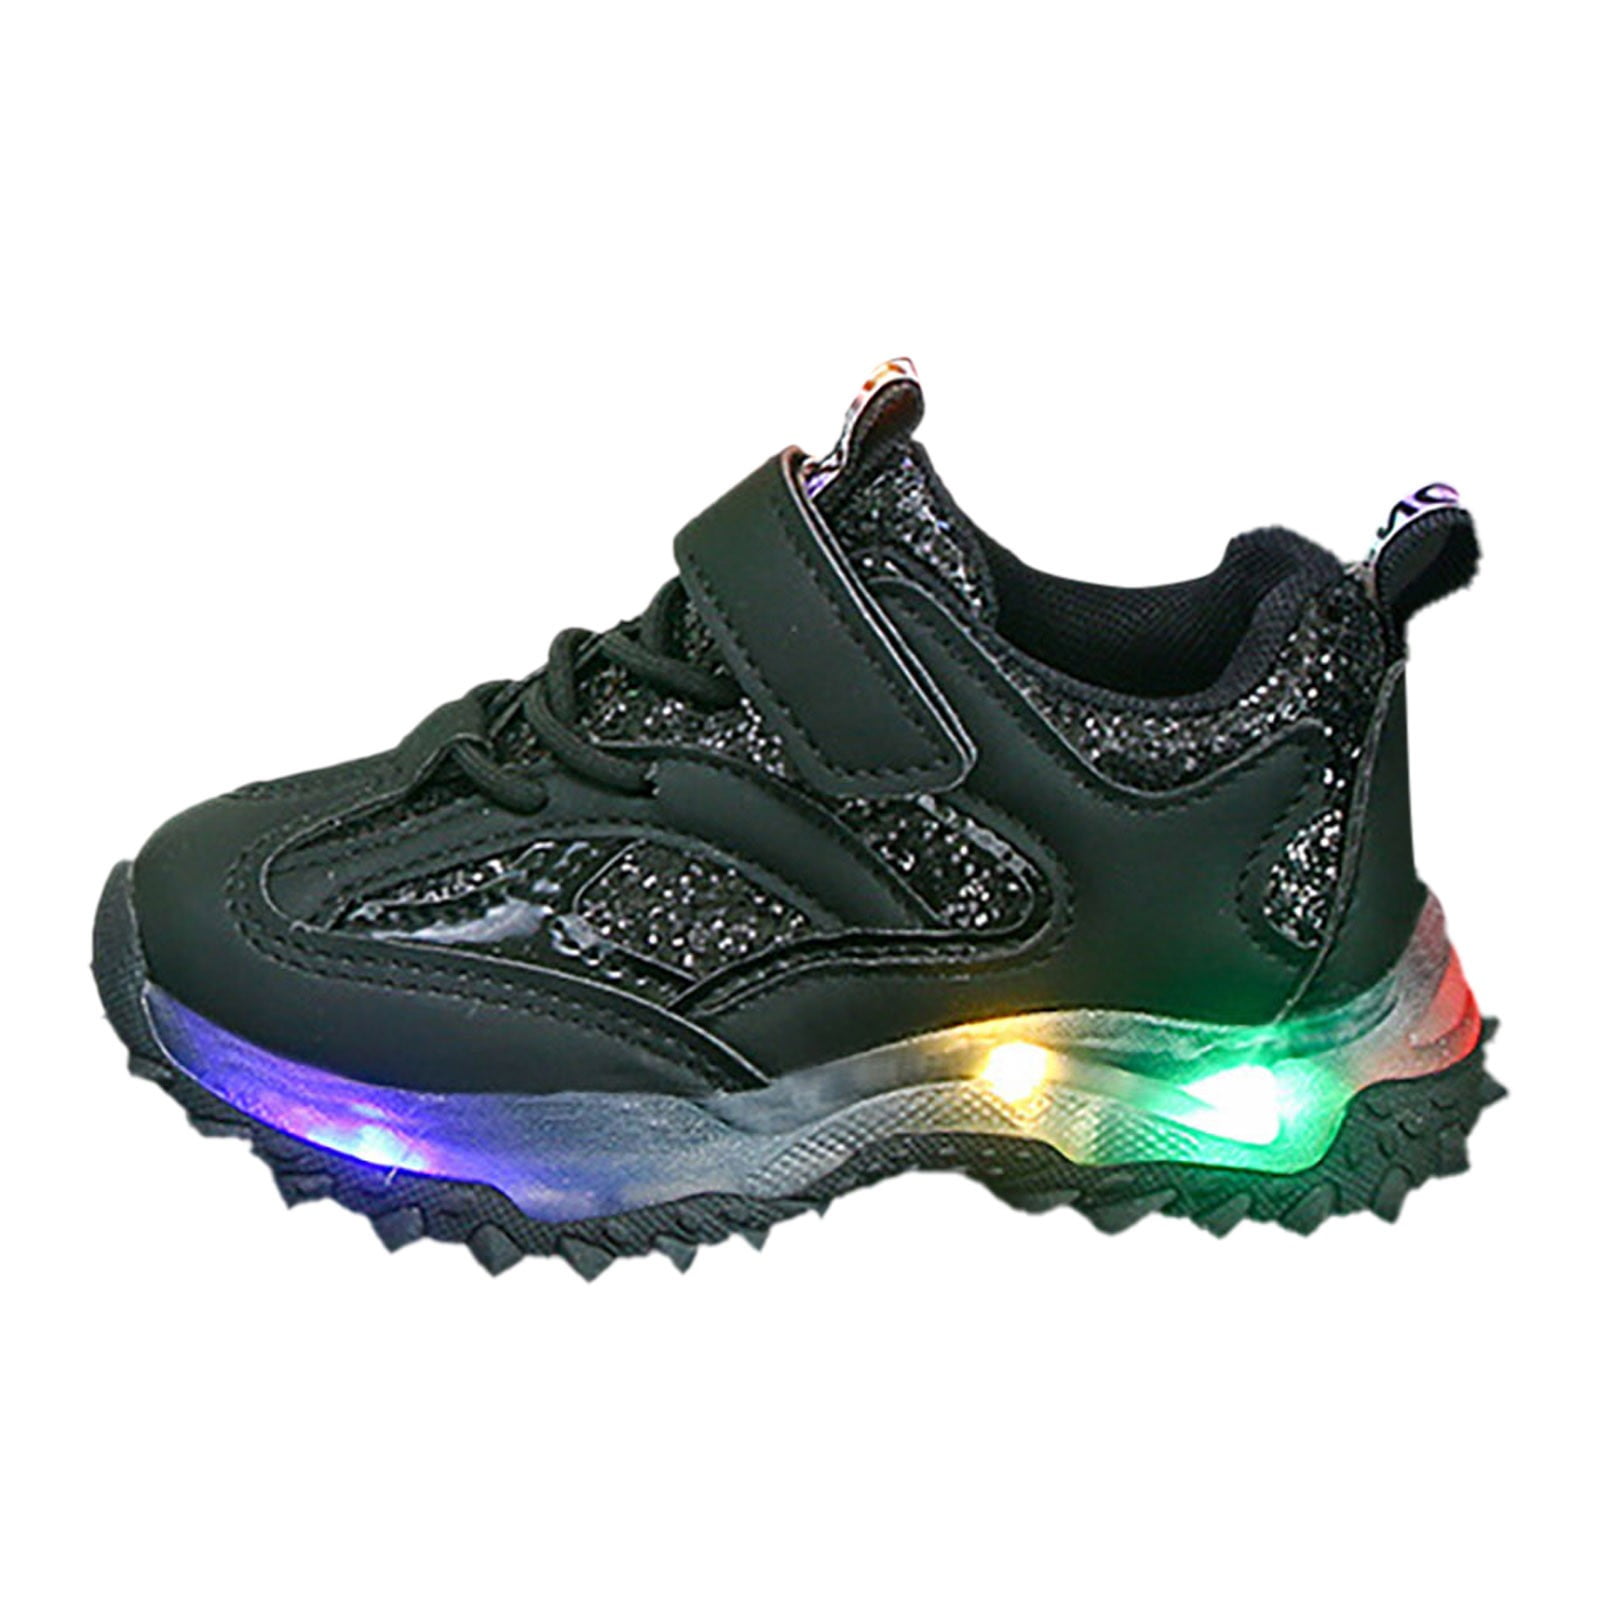 KaLI_store Kids Shoes Girls Lightweight Breathable Tennis Walking Sneakers  Velcro Sport Trail Running Shoe for Toddler/Little/Big Kid,White 